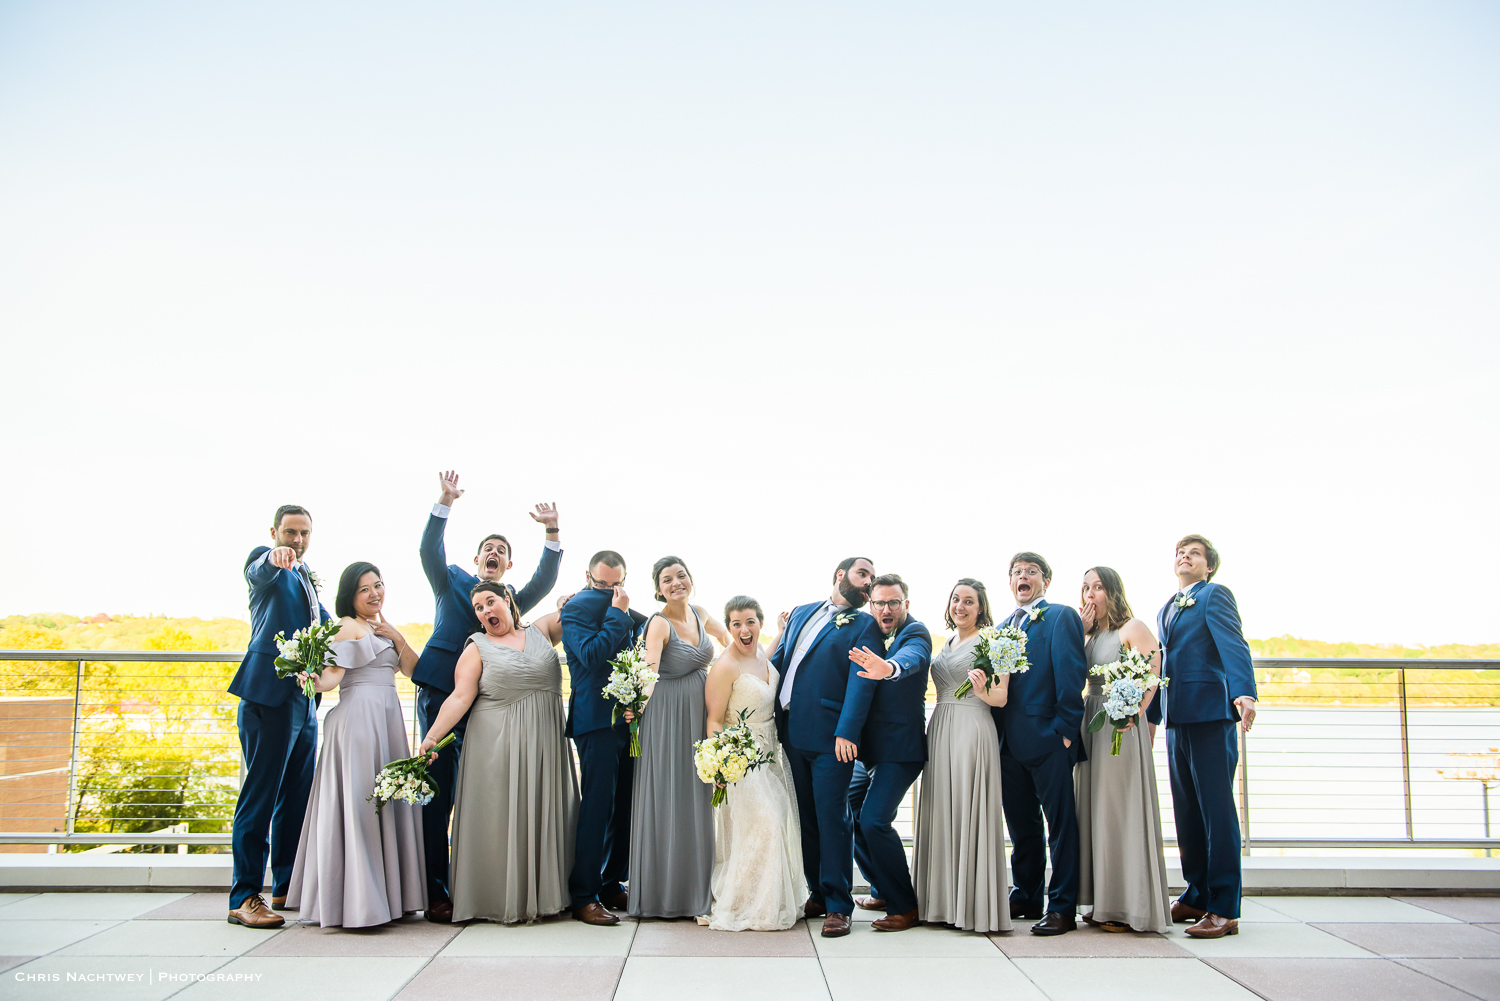 wedding-photos-united-states-coast-guard-academy-chris-nachtwey-photography-2019-16.jpg